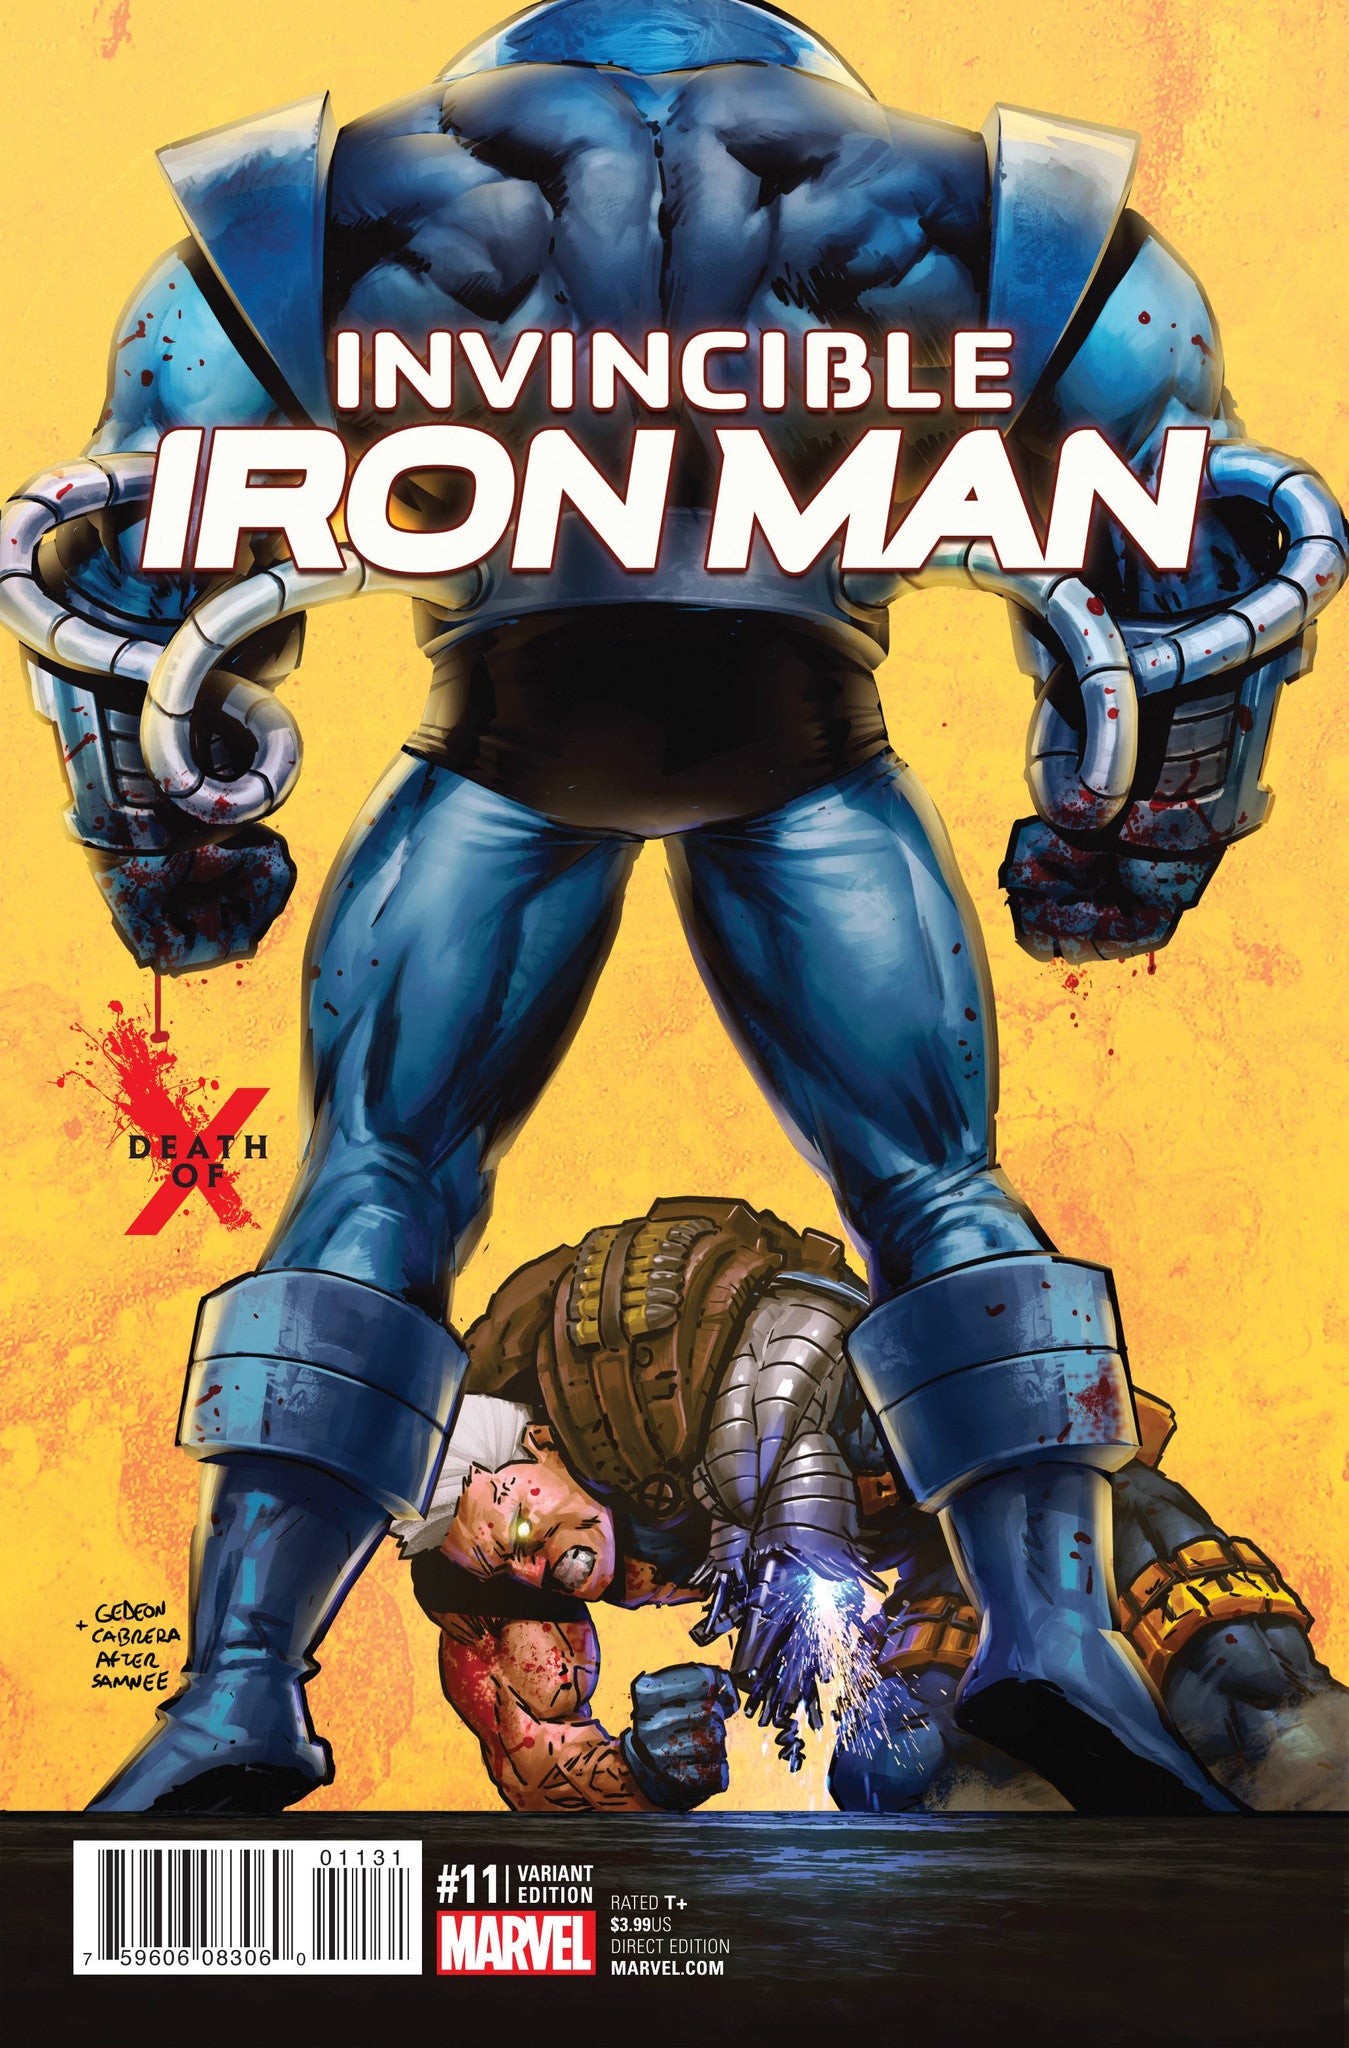 INVINCIBLE IRON MAN #11 DEATHOF X VAR RCW2 COVER